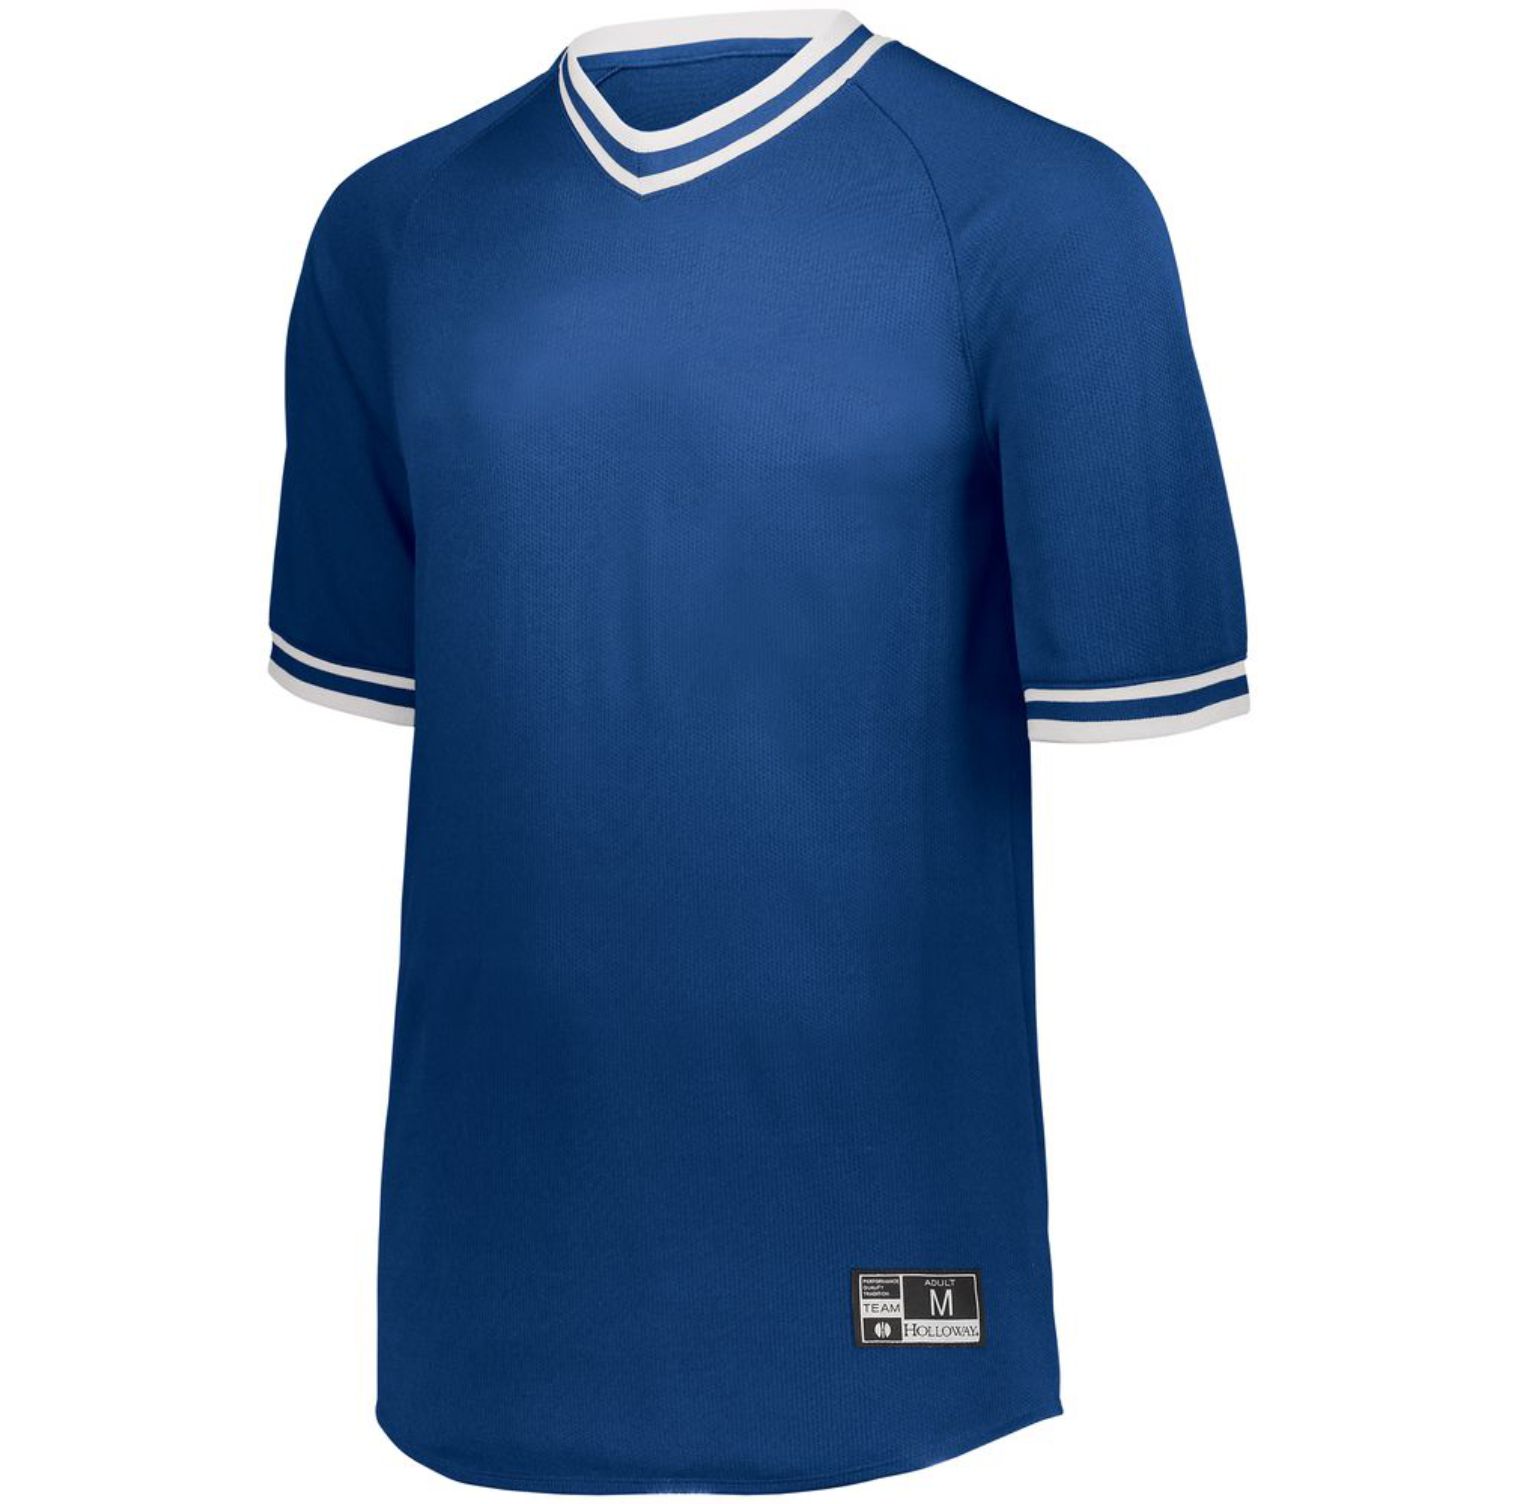 Holloway Retro V-Neck Baseball Jersey #221021 Royal Blue / White